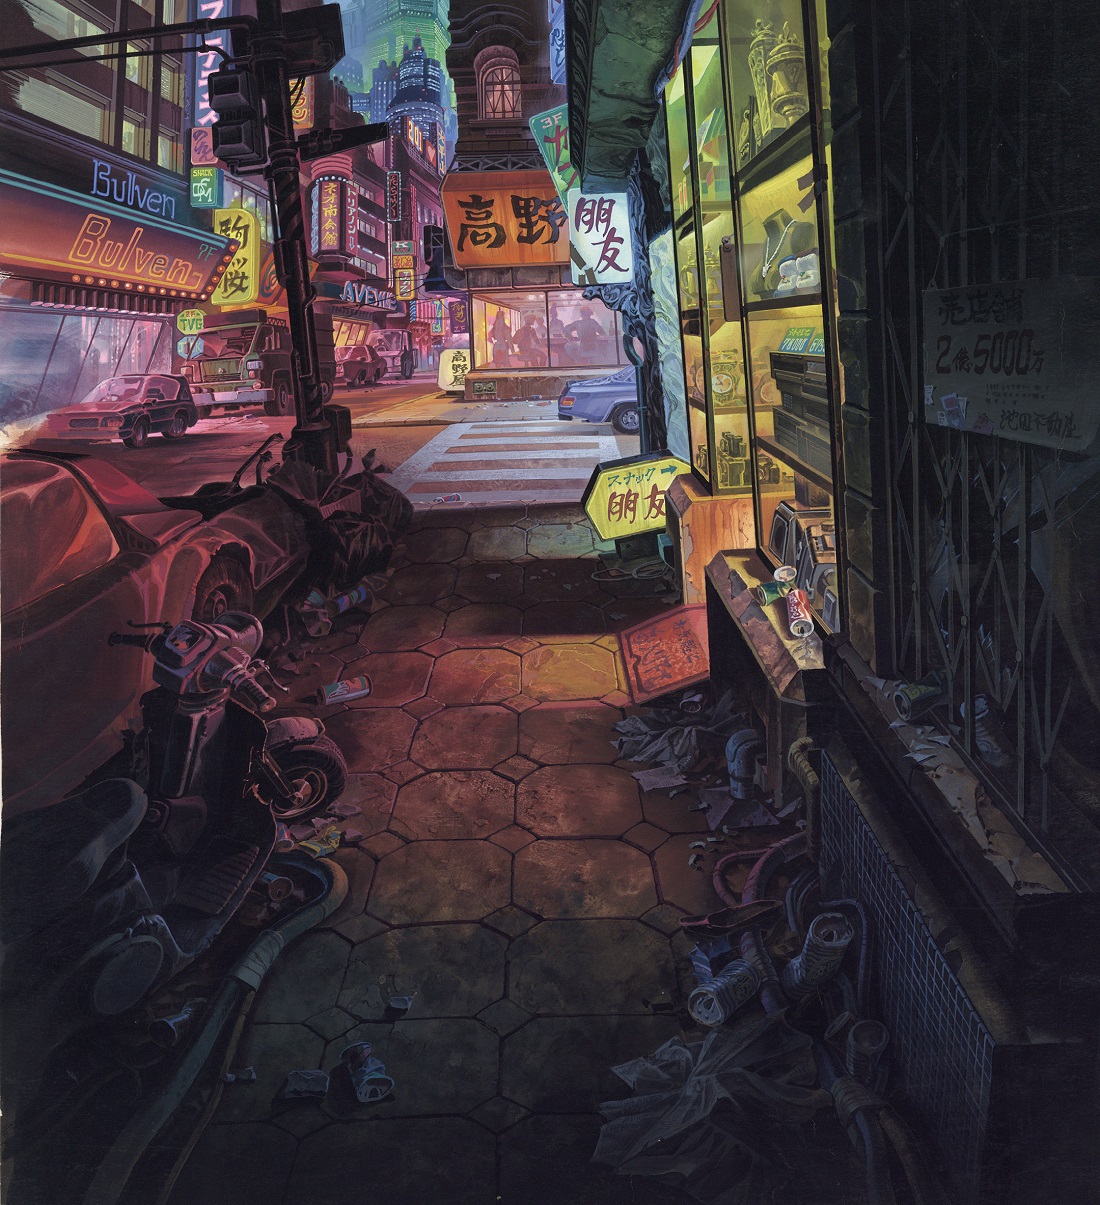 AKIRA, Schnitt Nr. 182, finaler Produktonshintergrund, Toshiharu Mizutani (Bild: Plakatfarbe auf Papier, 55 x 42 cm)